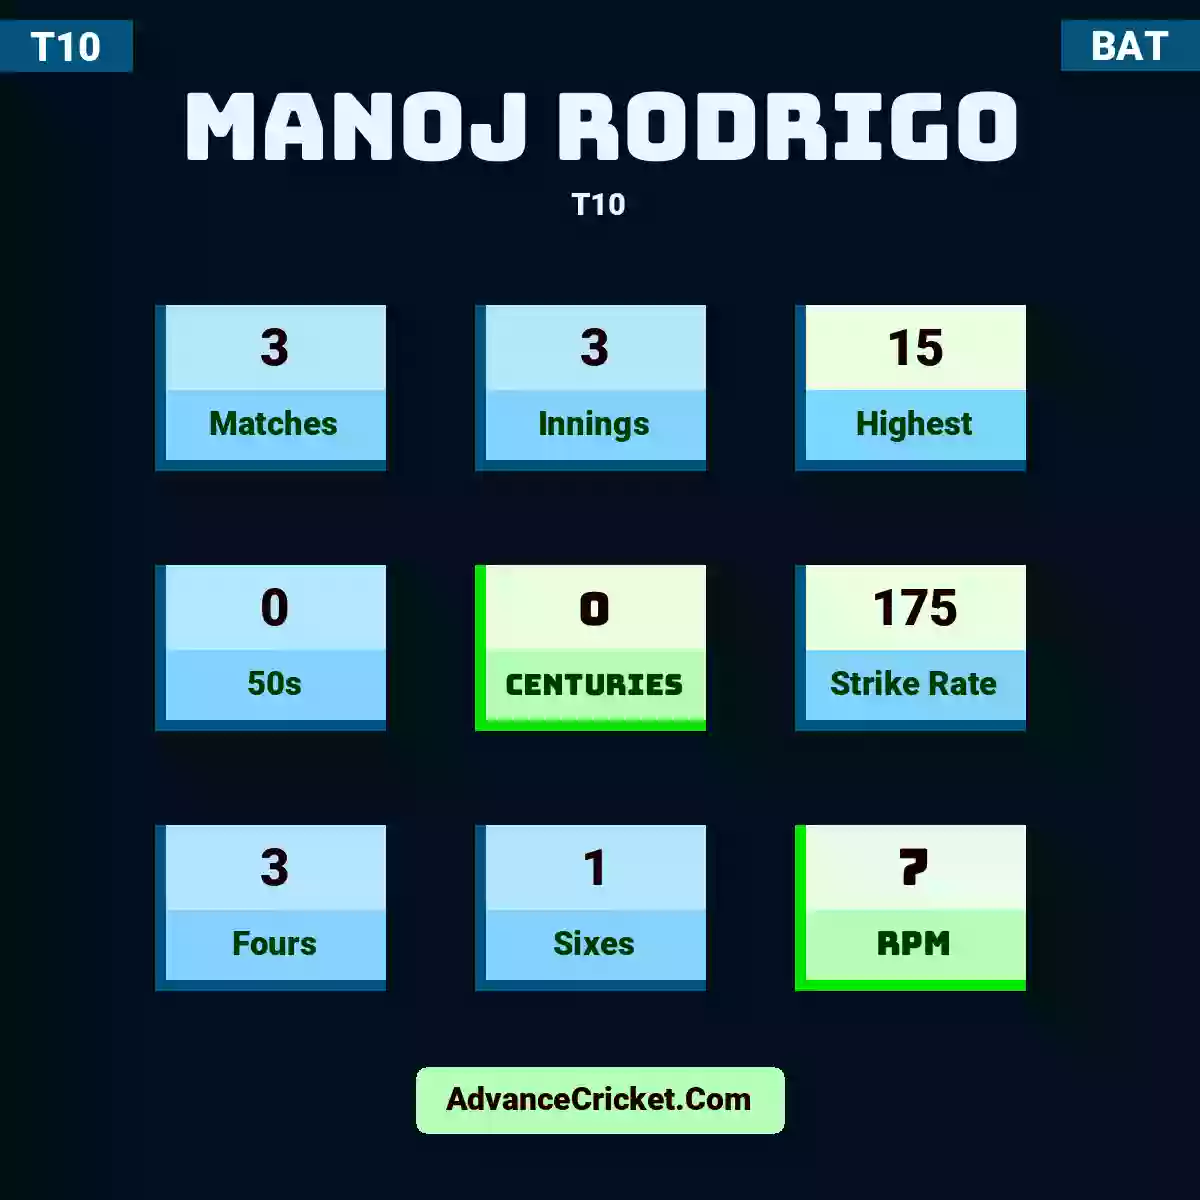 Manoj Rodrigo T10 , Manoj Rodrigo played 3 matches, scored 15 runs as highest, 0 half-centuries, and 0 centuries, with a strike rate of 175. M.Rodrigo hit 3 fours and 1 sixes, with an RPM of 7.